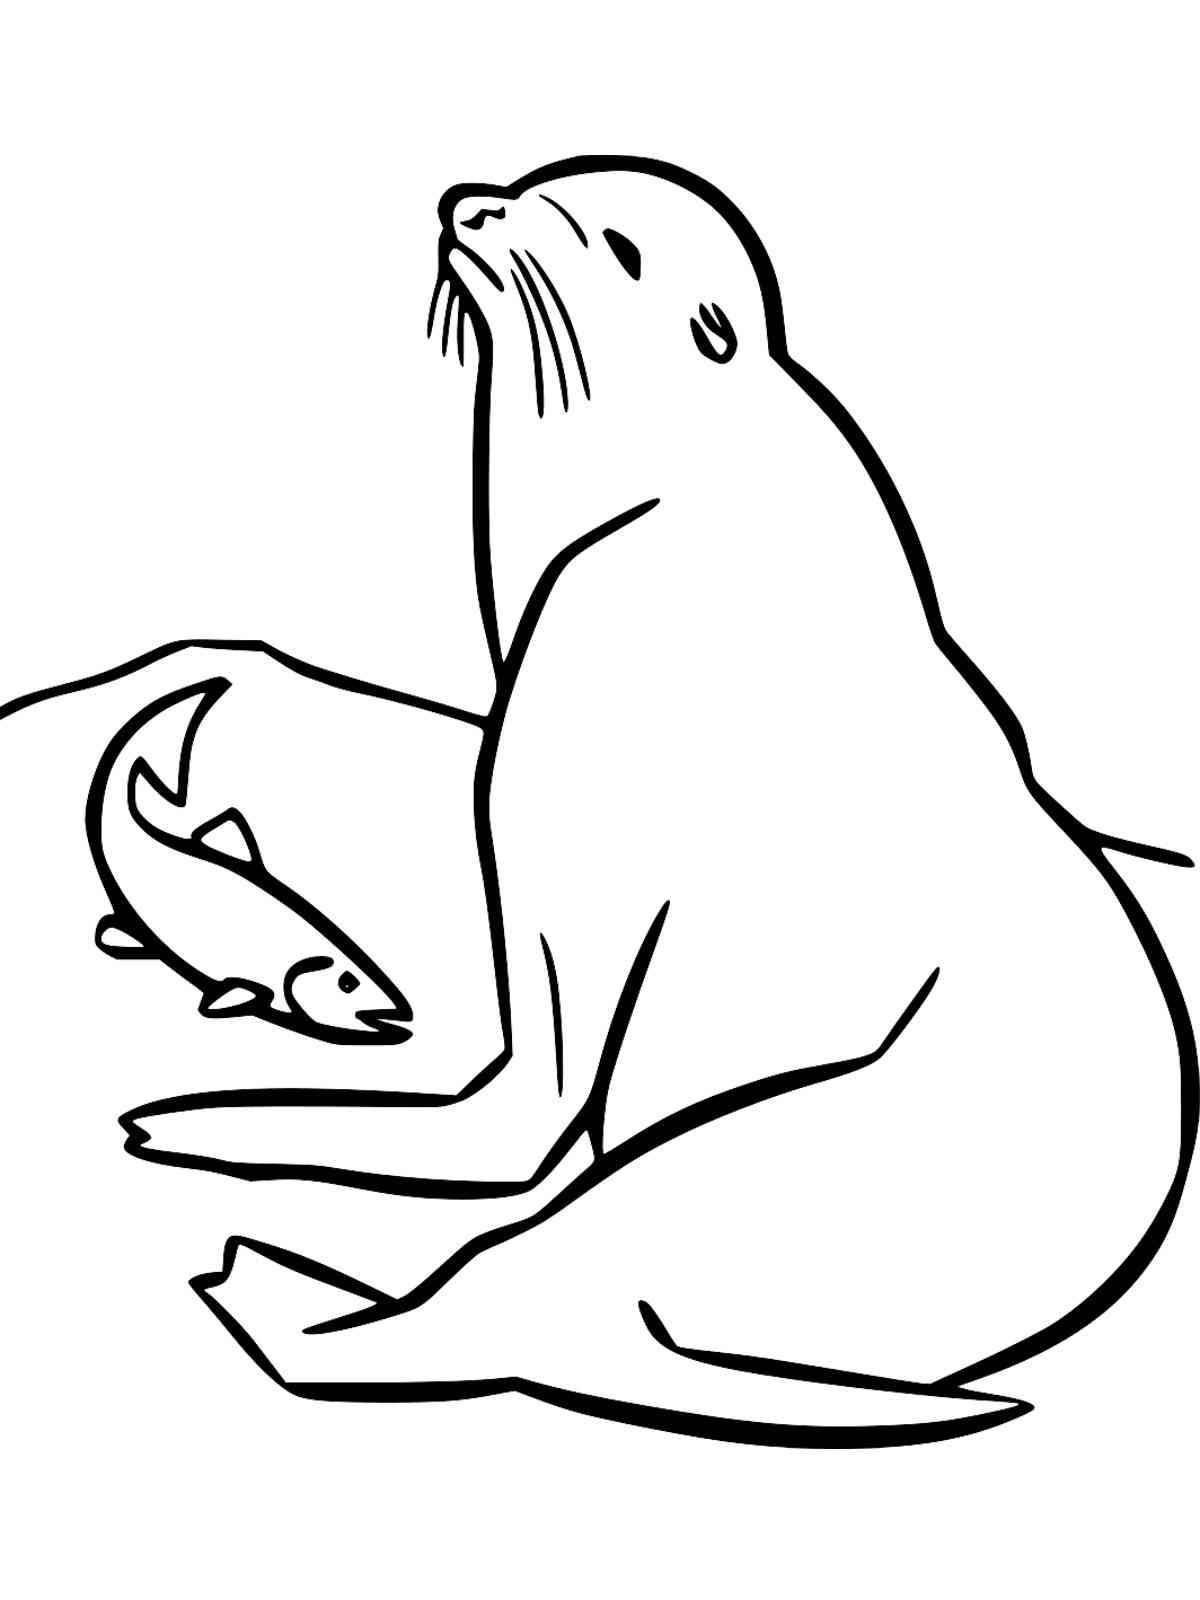 Vibrant sea lion coloring page